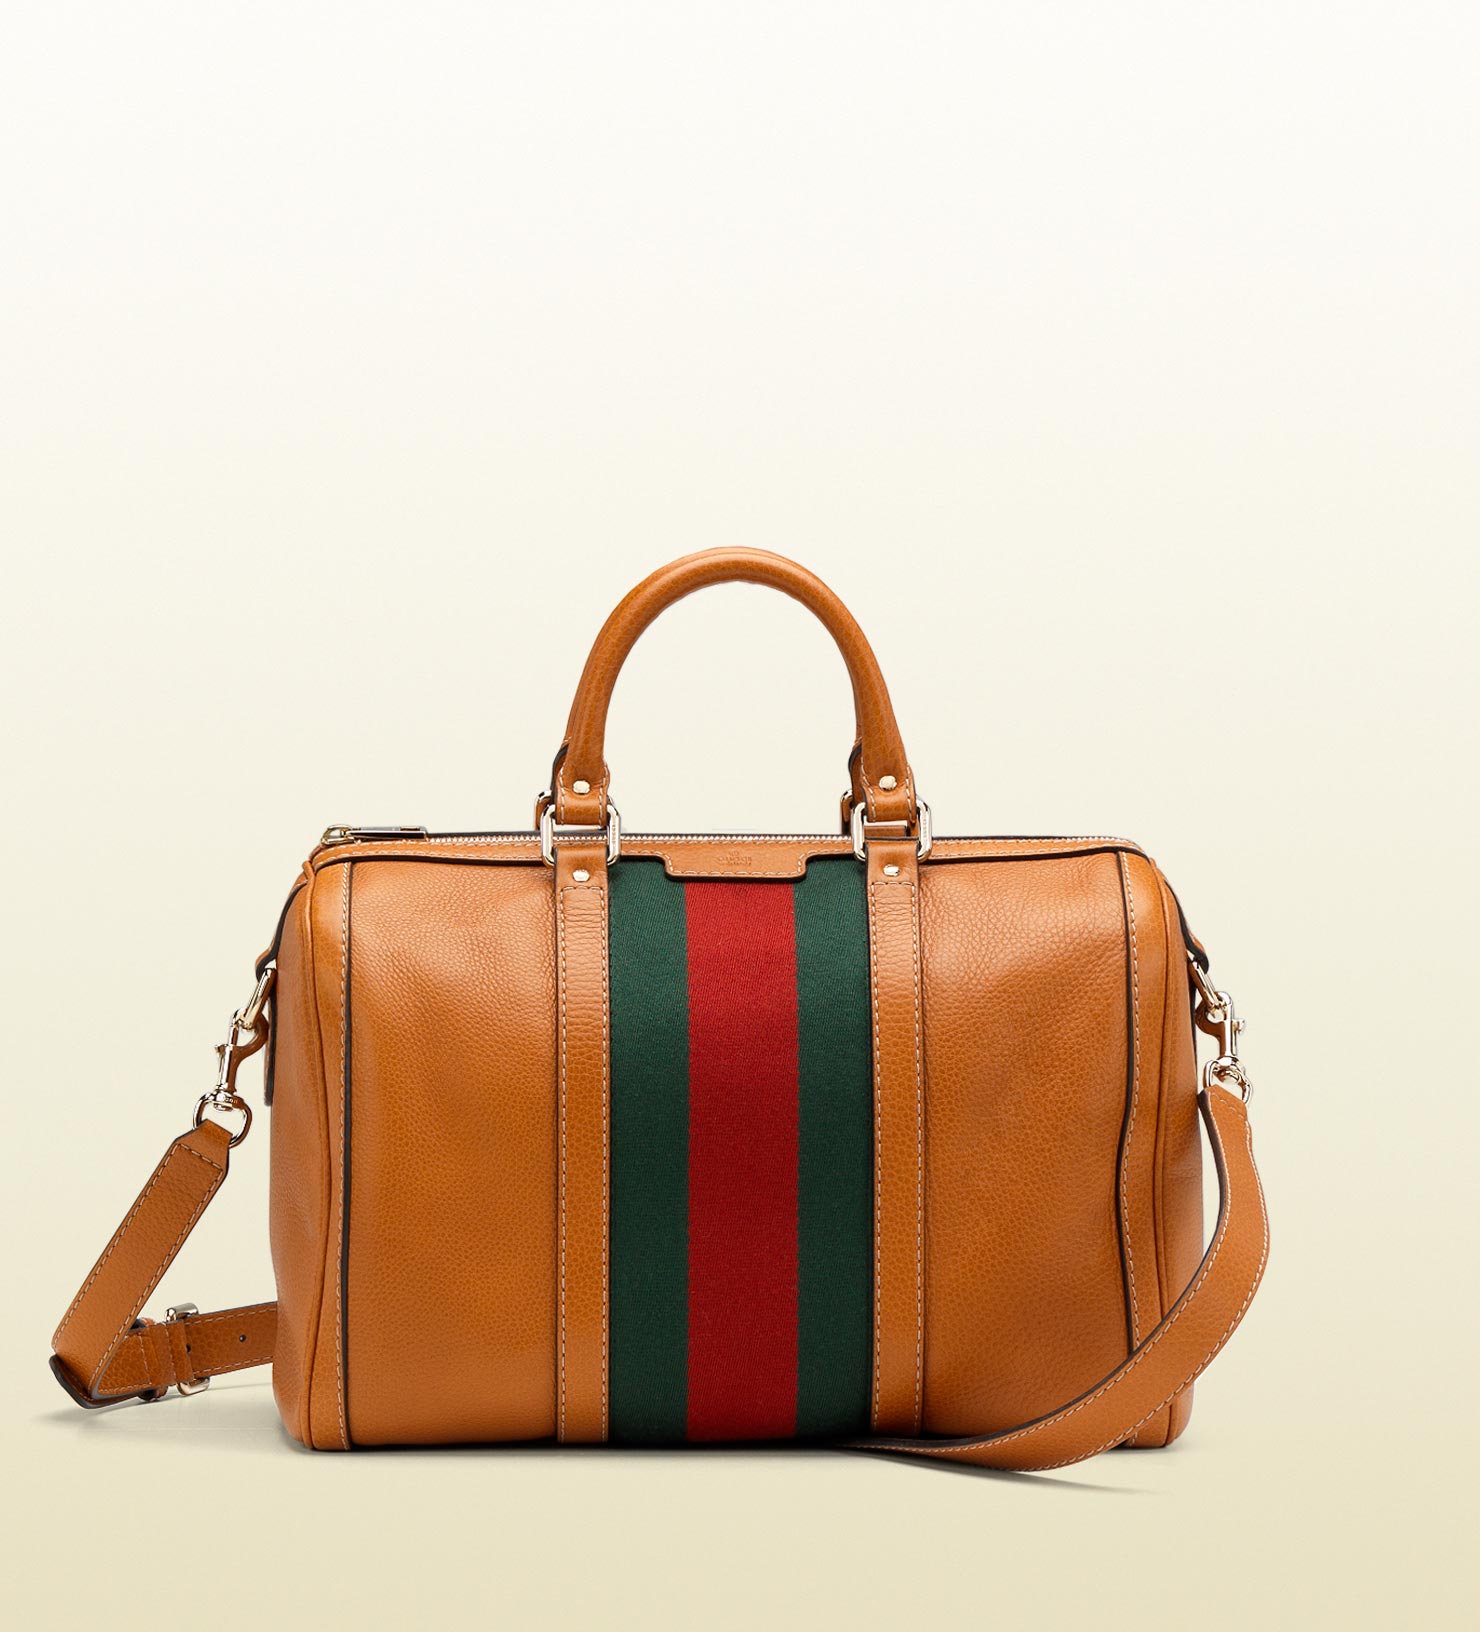 Gucci Vintage Web Boston Bag in Brown - Lyst